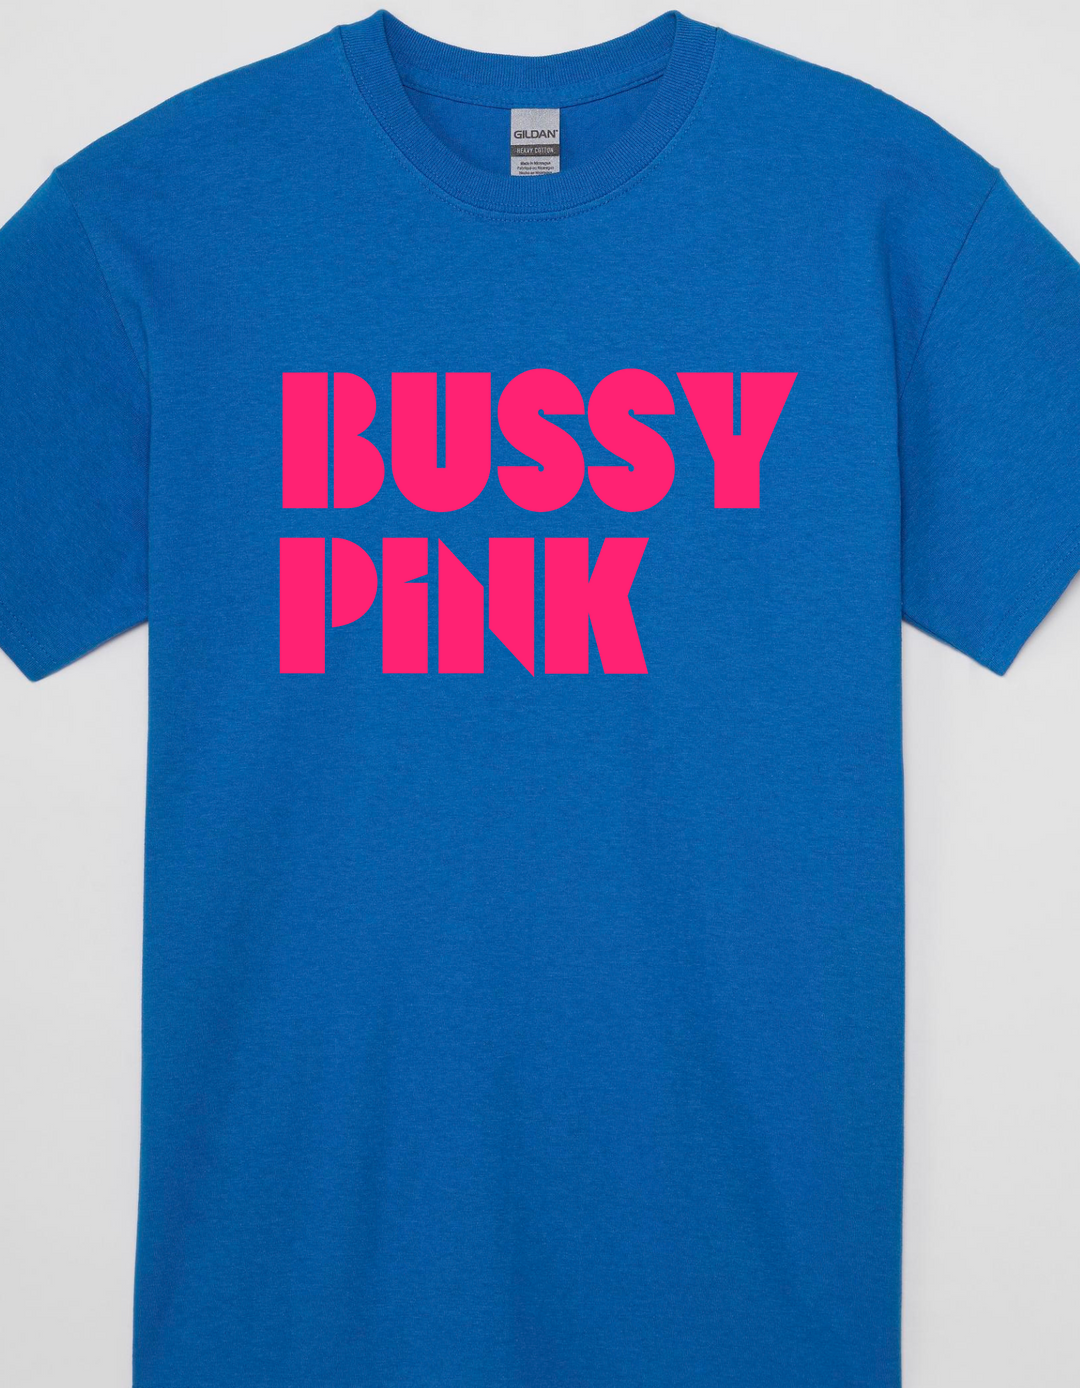 Bussy Pink Tshirt - Wicked Fox